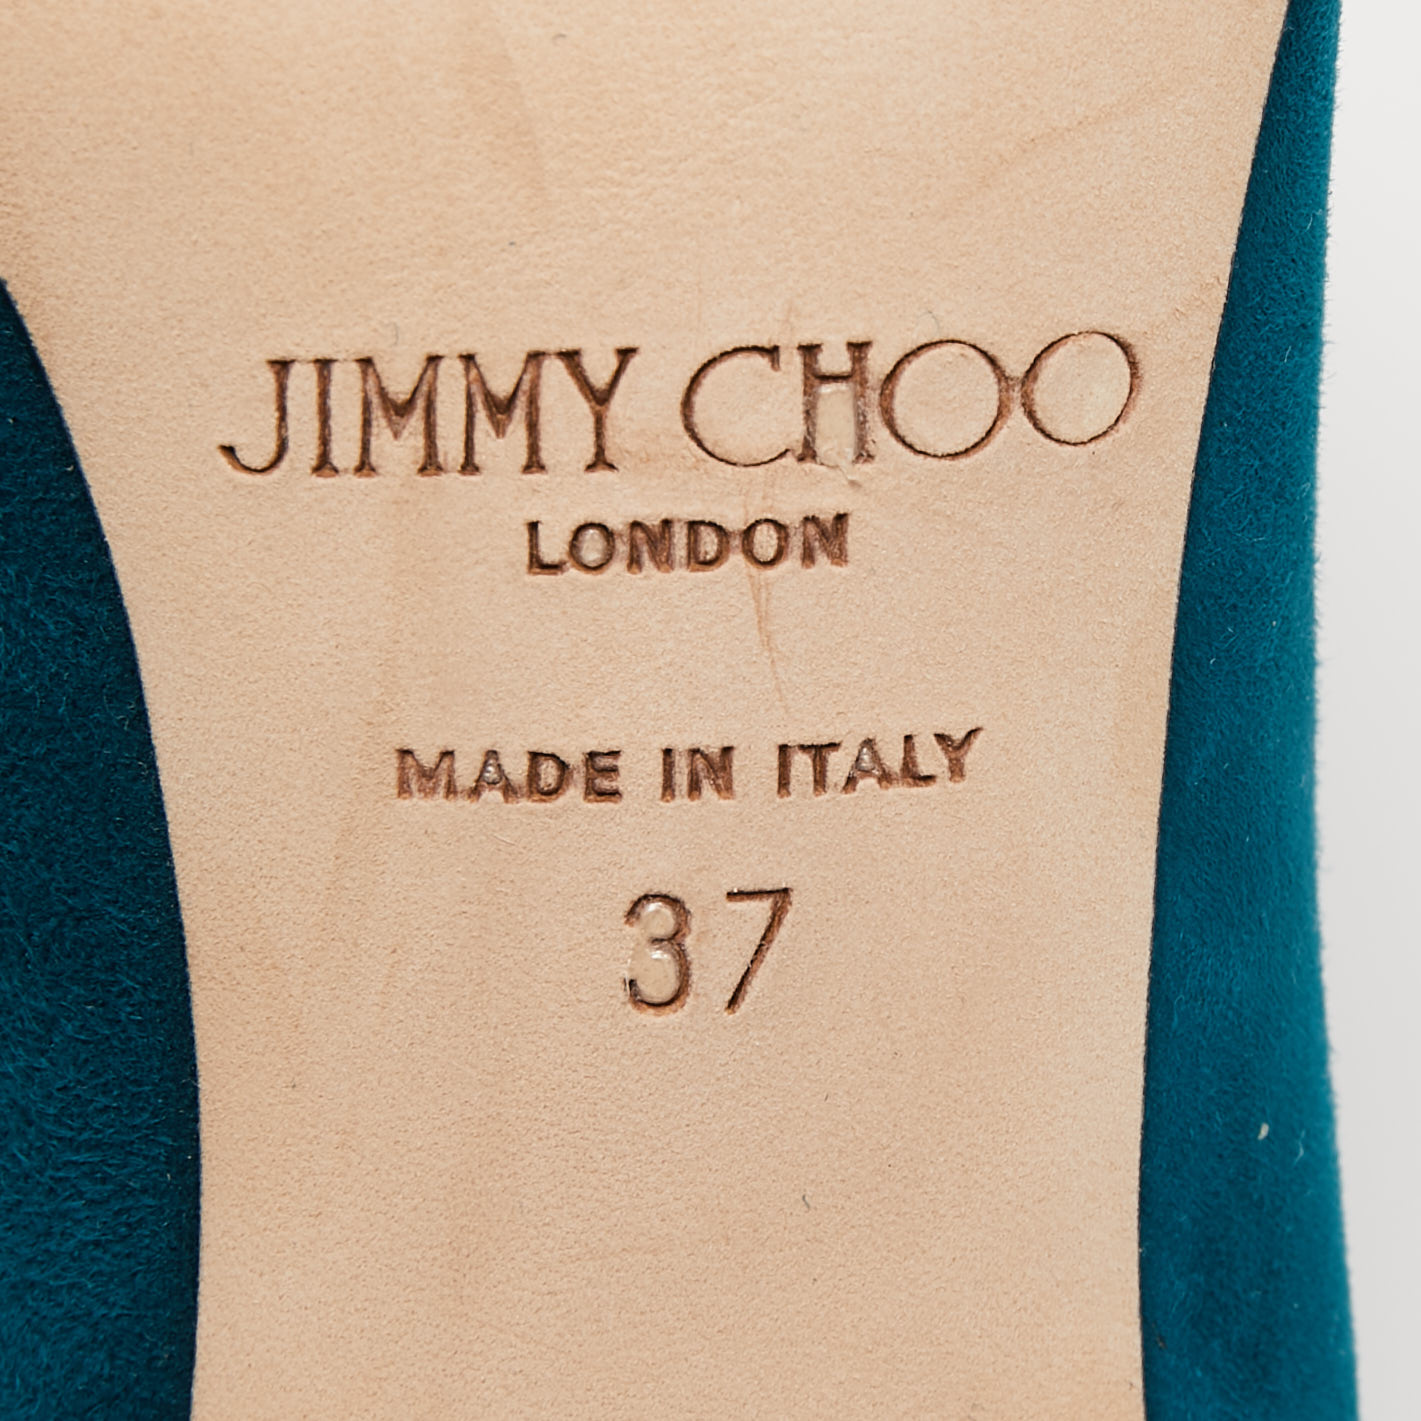 Jimmy Choo Teal Suede Vesna Pumps Size 37